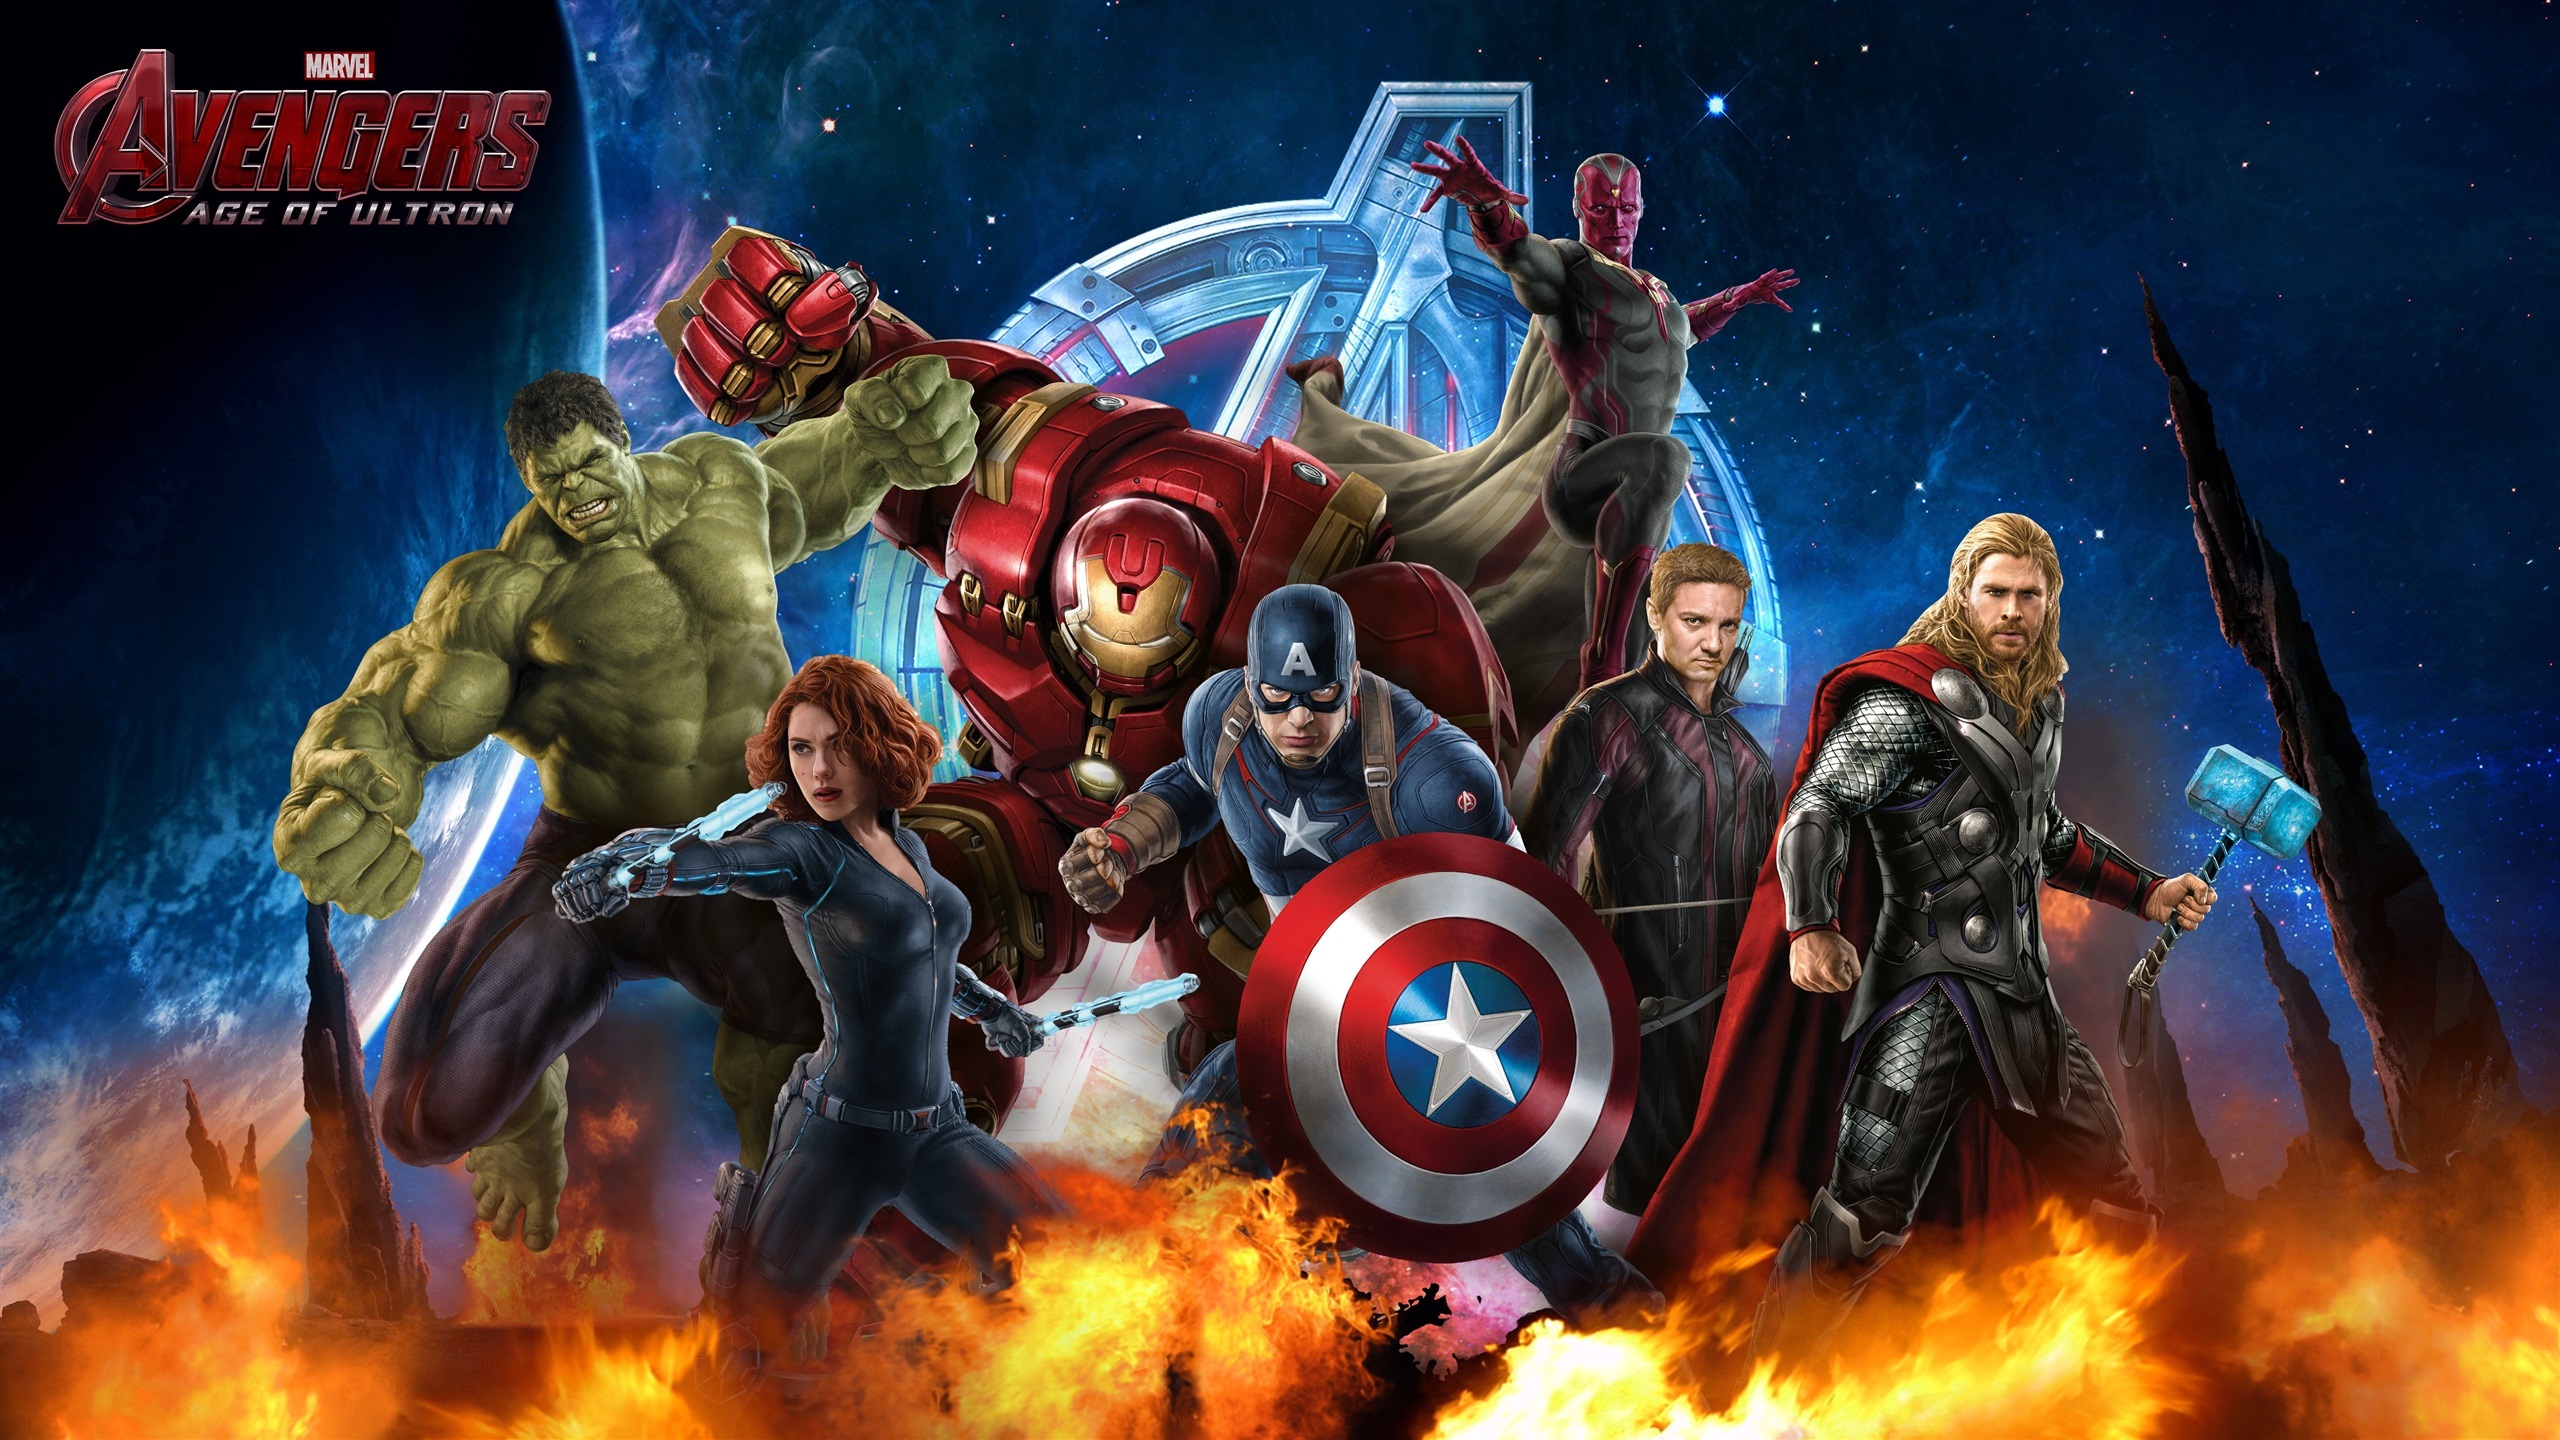 Movie Avengers Age of Ultron HD Wallpaper